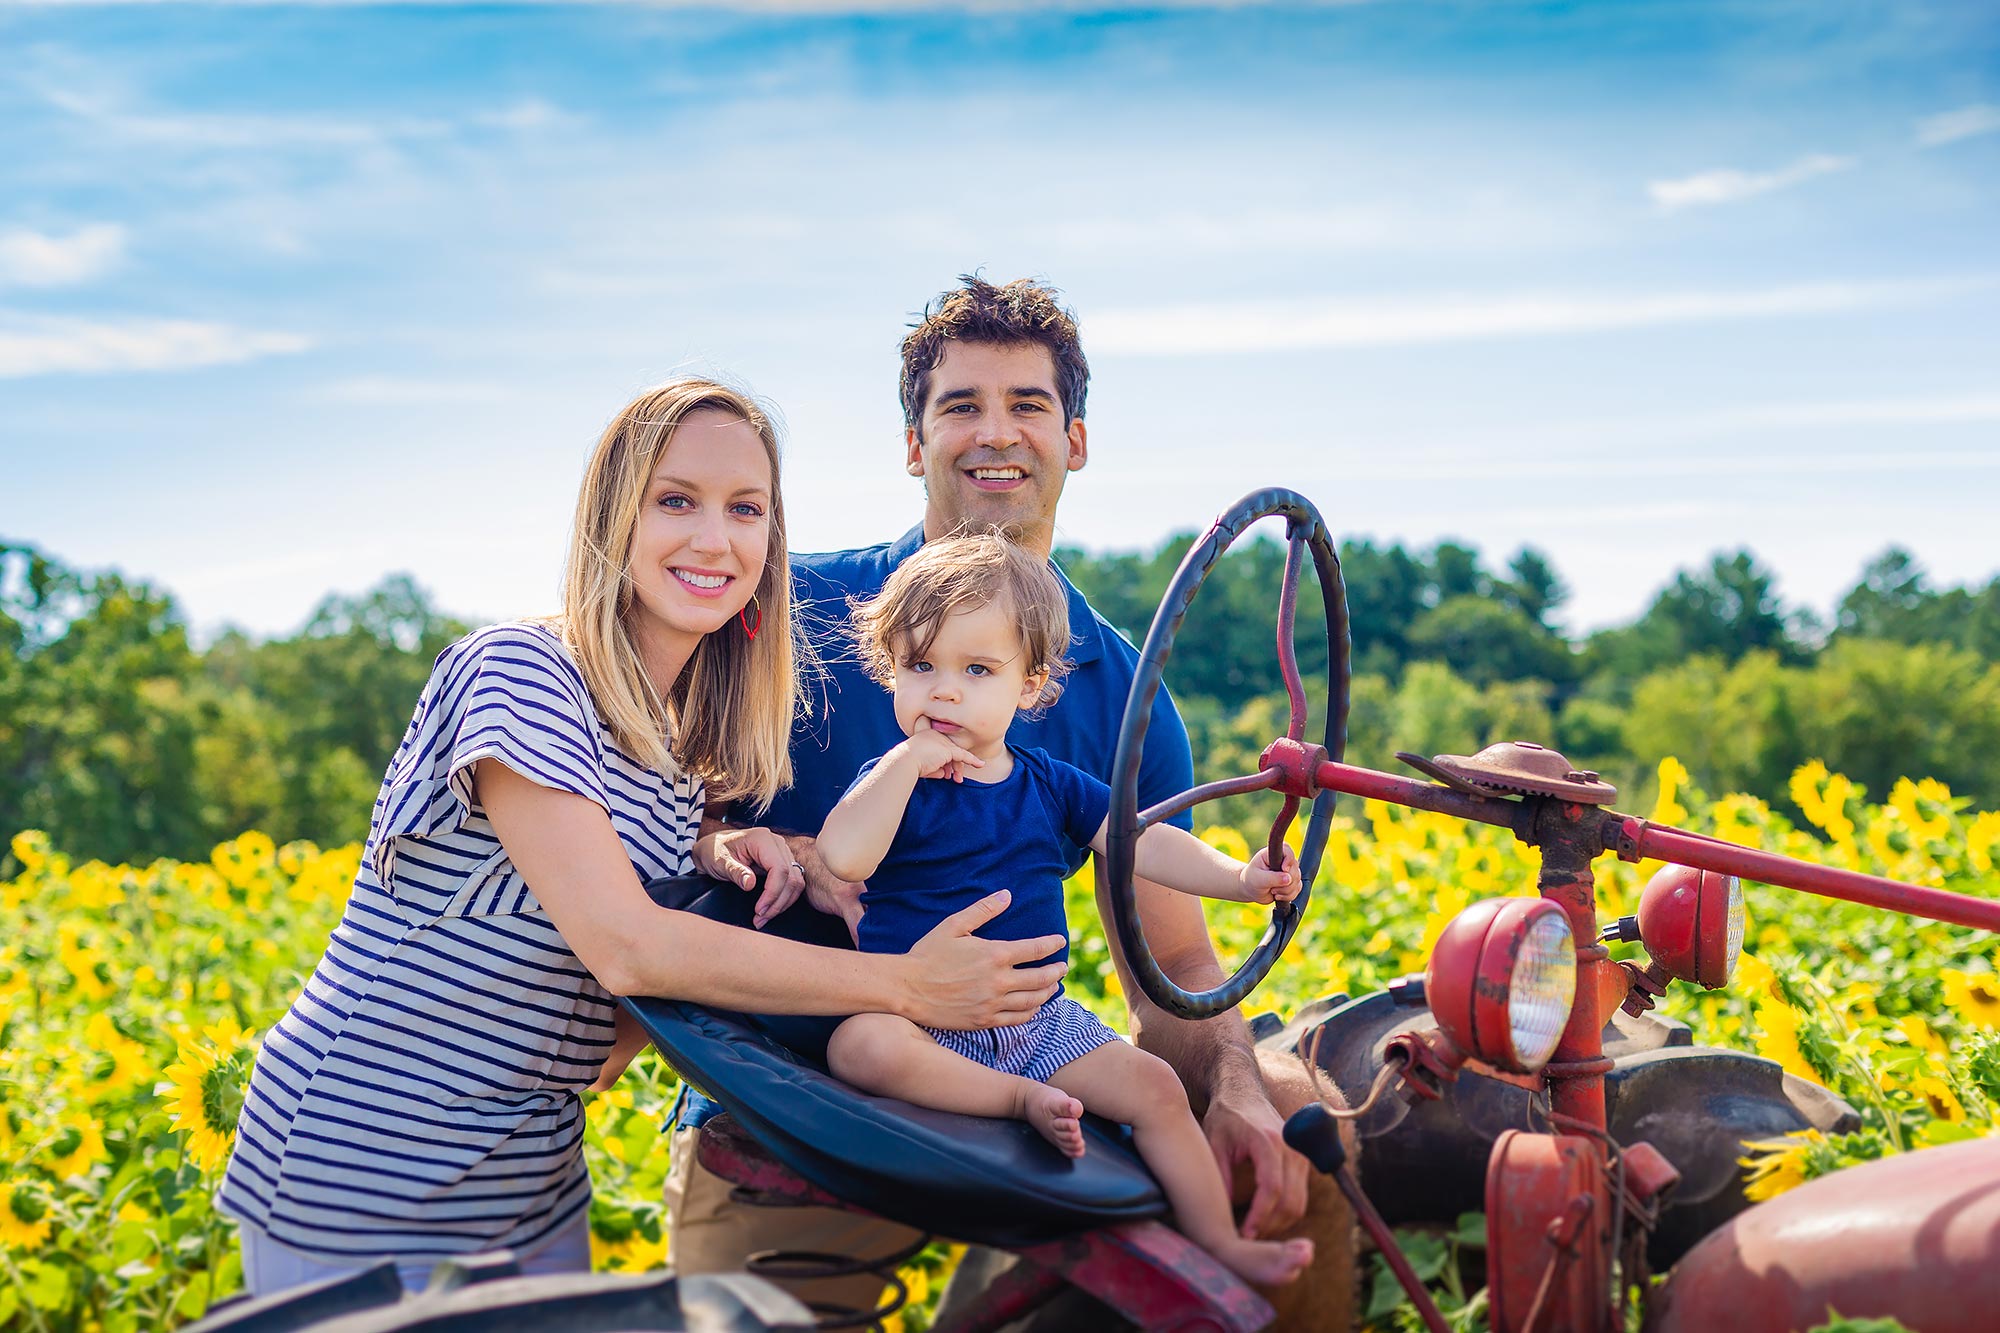 Colby Farm Family Portrait Photographer | Stephen Grant Photography